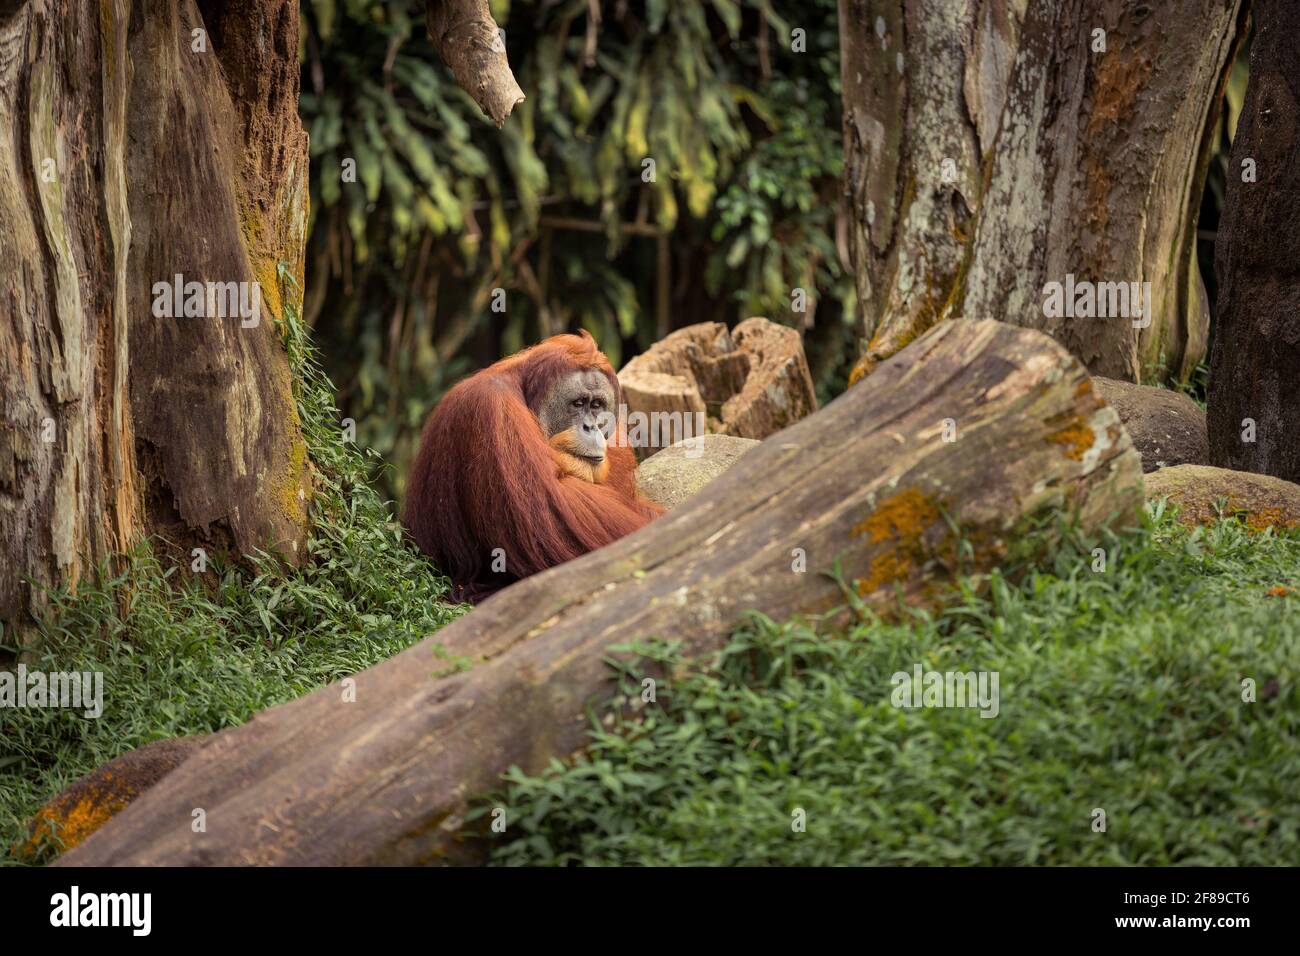 One big male orangutan sitting on the ground with a sad expression. Stock Photo